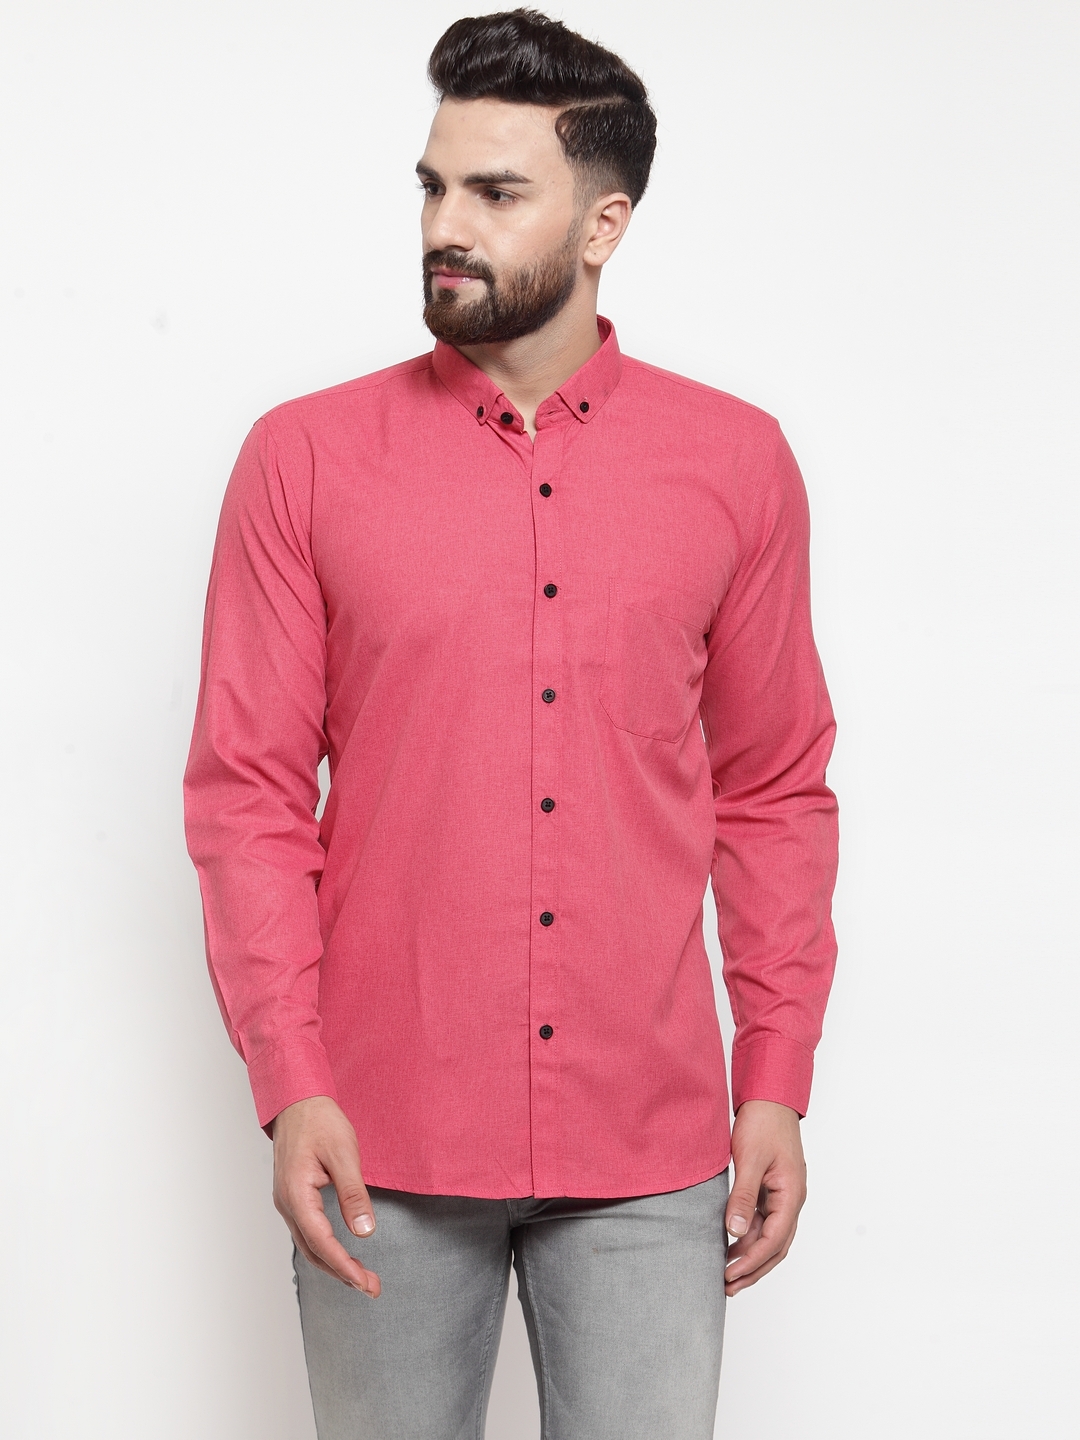 Jainish Men's Cotton Solid Button Down Casual Shirts